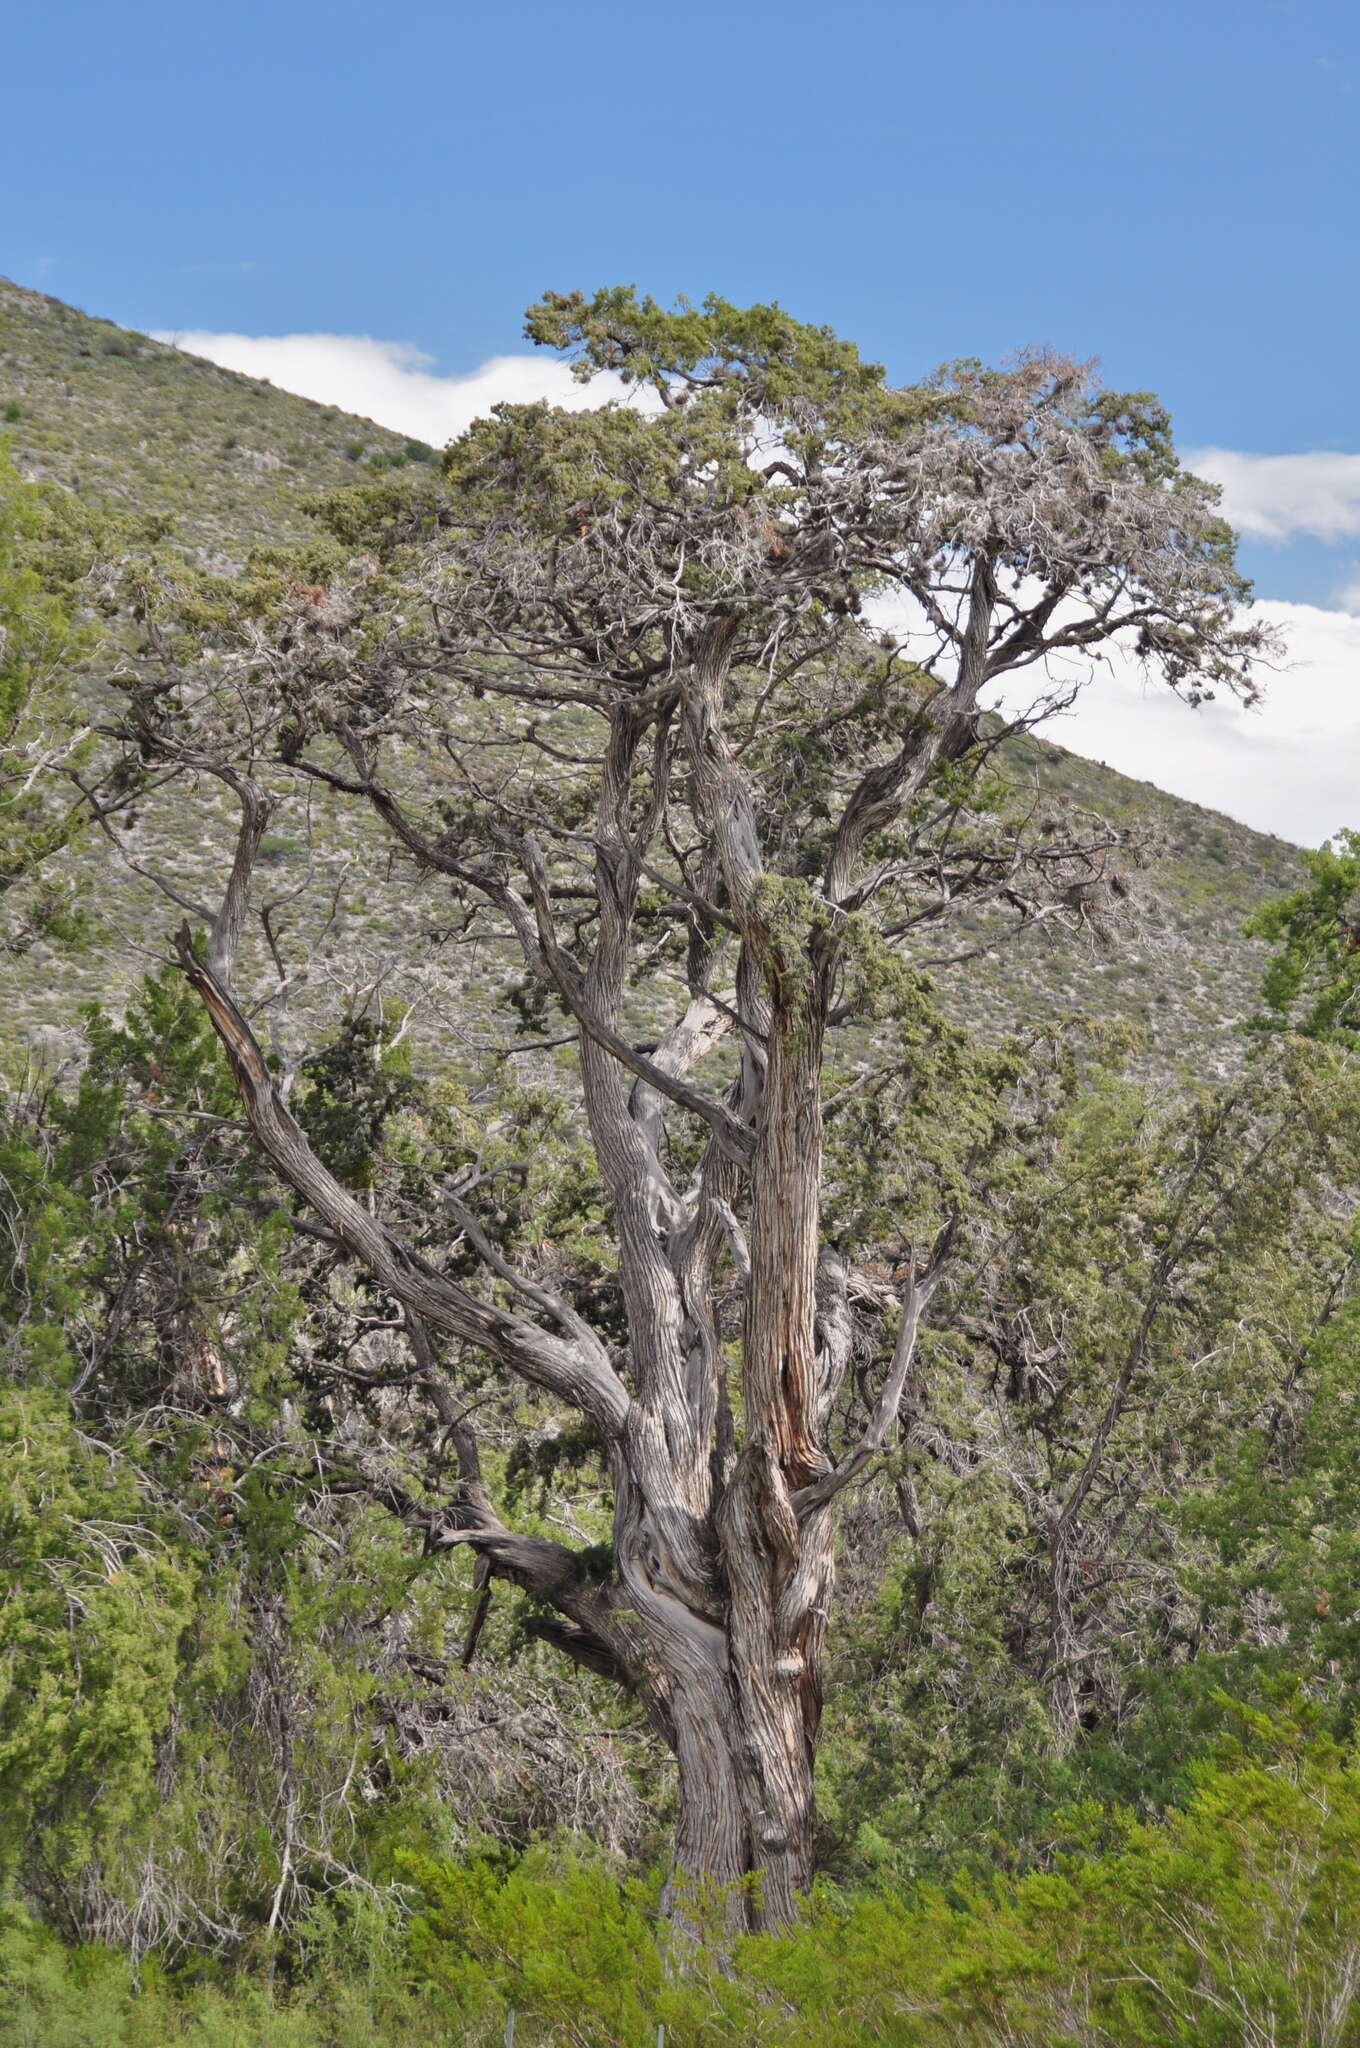 Image of Juniperus saltillensis M. T. Hall